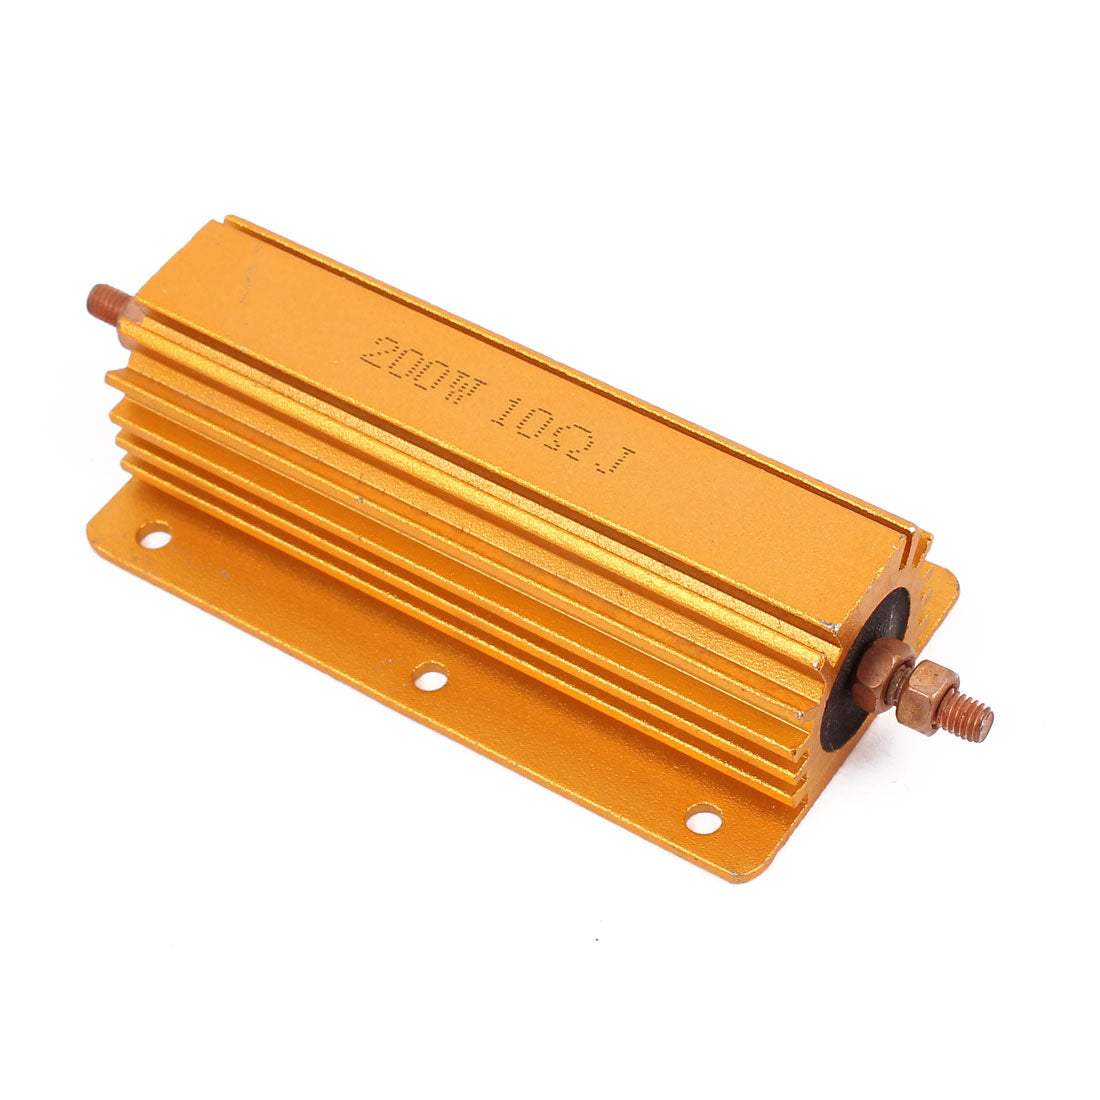 uxcell Uxcell 5% 200W 10 Ohm Axial Lead Gold Tone Heatsink Aluminum Clad Resistor